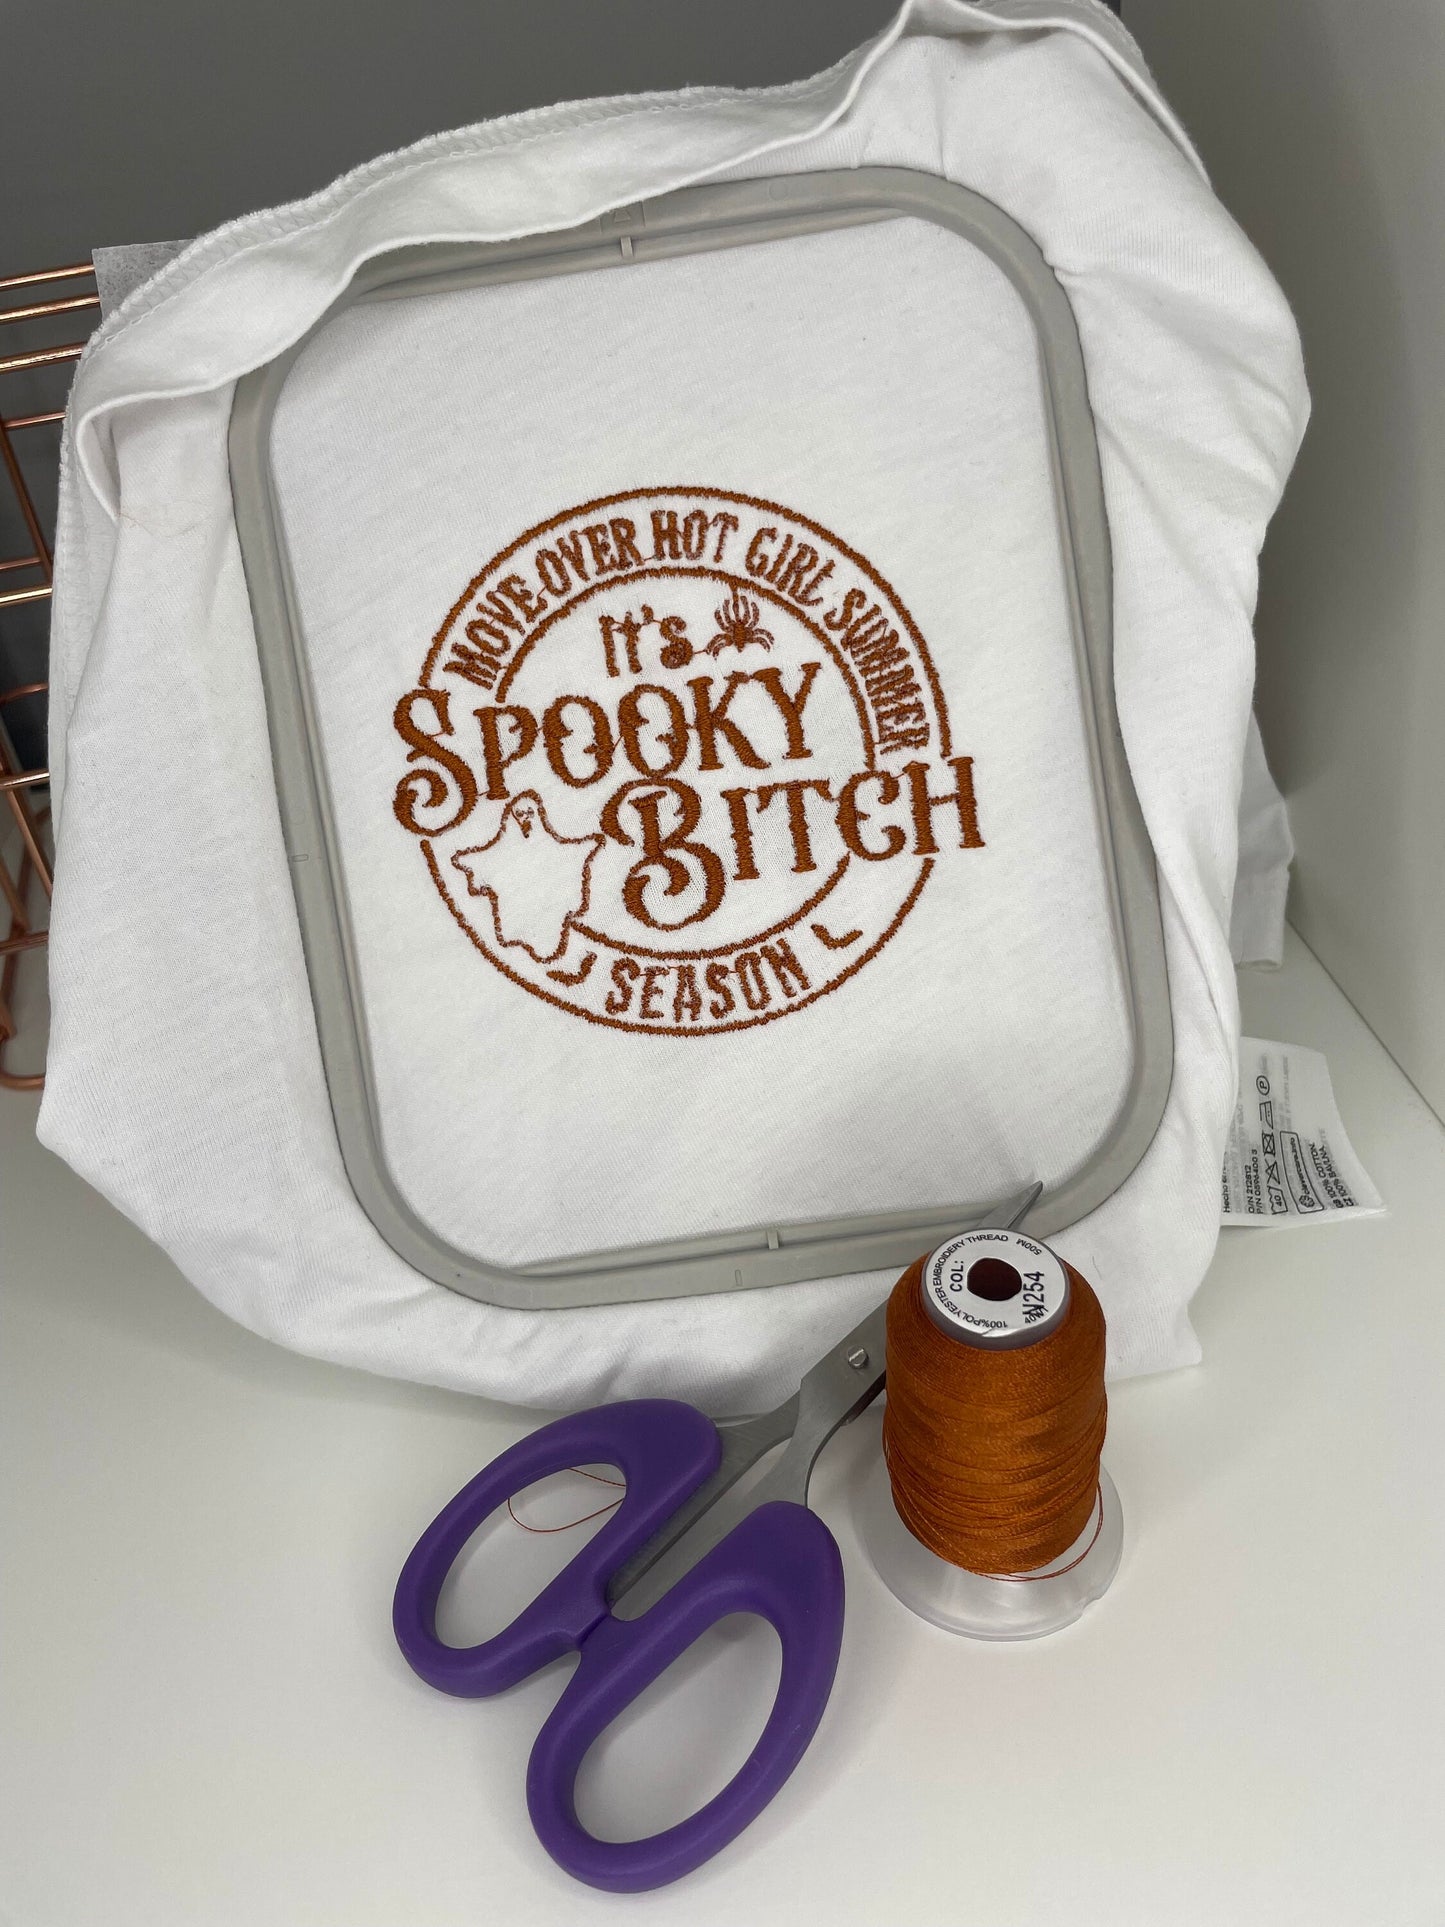 Hello Spooky Bitch Season, Goodbye Hot Girl Summer Embroidery T-shirt, unisex spooky season cheeky tee